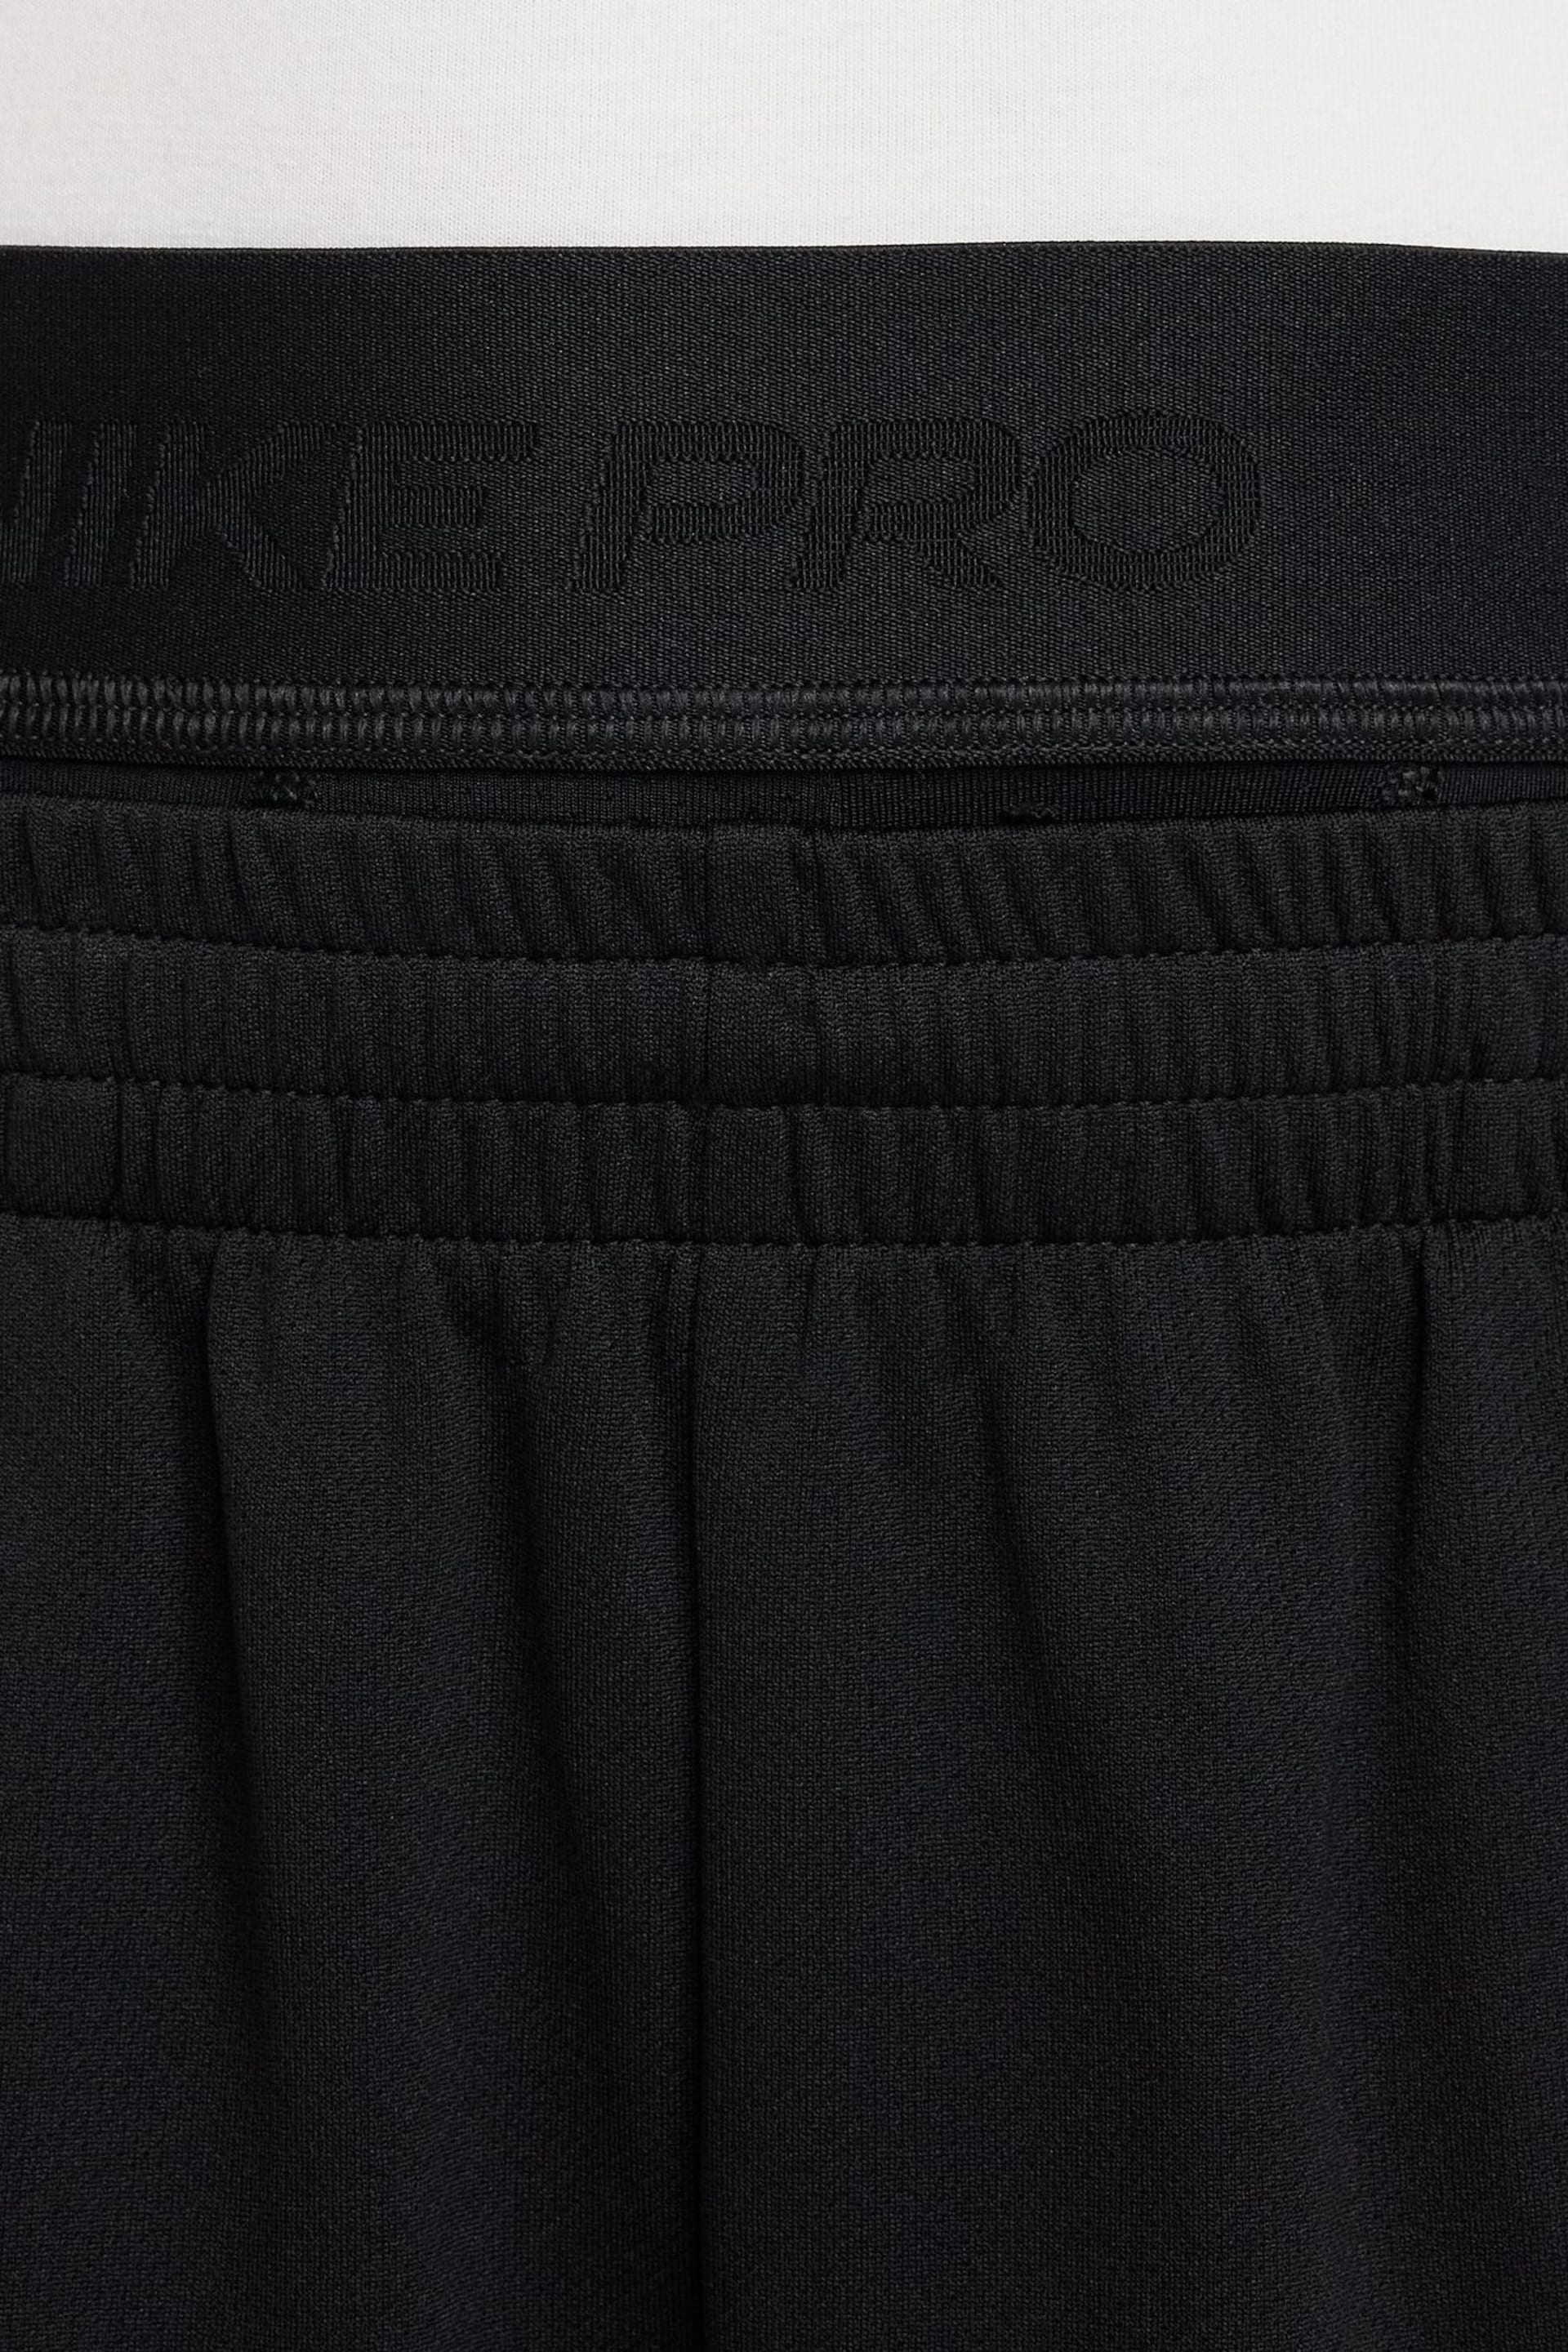 Nike Black Dri-FIT Pro Base Layer - Image 8 of 9